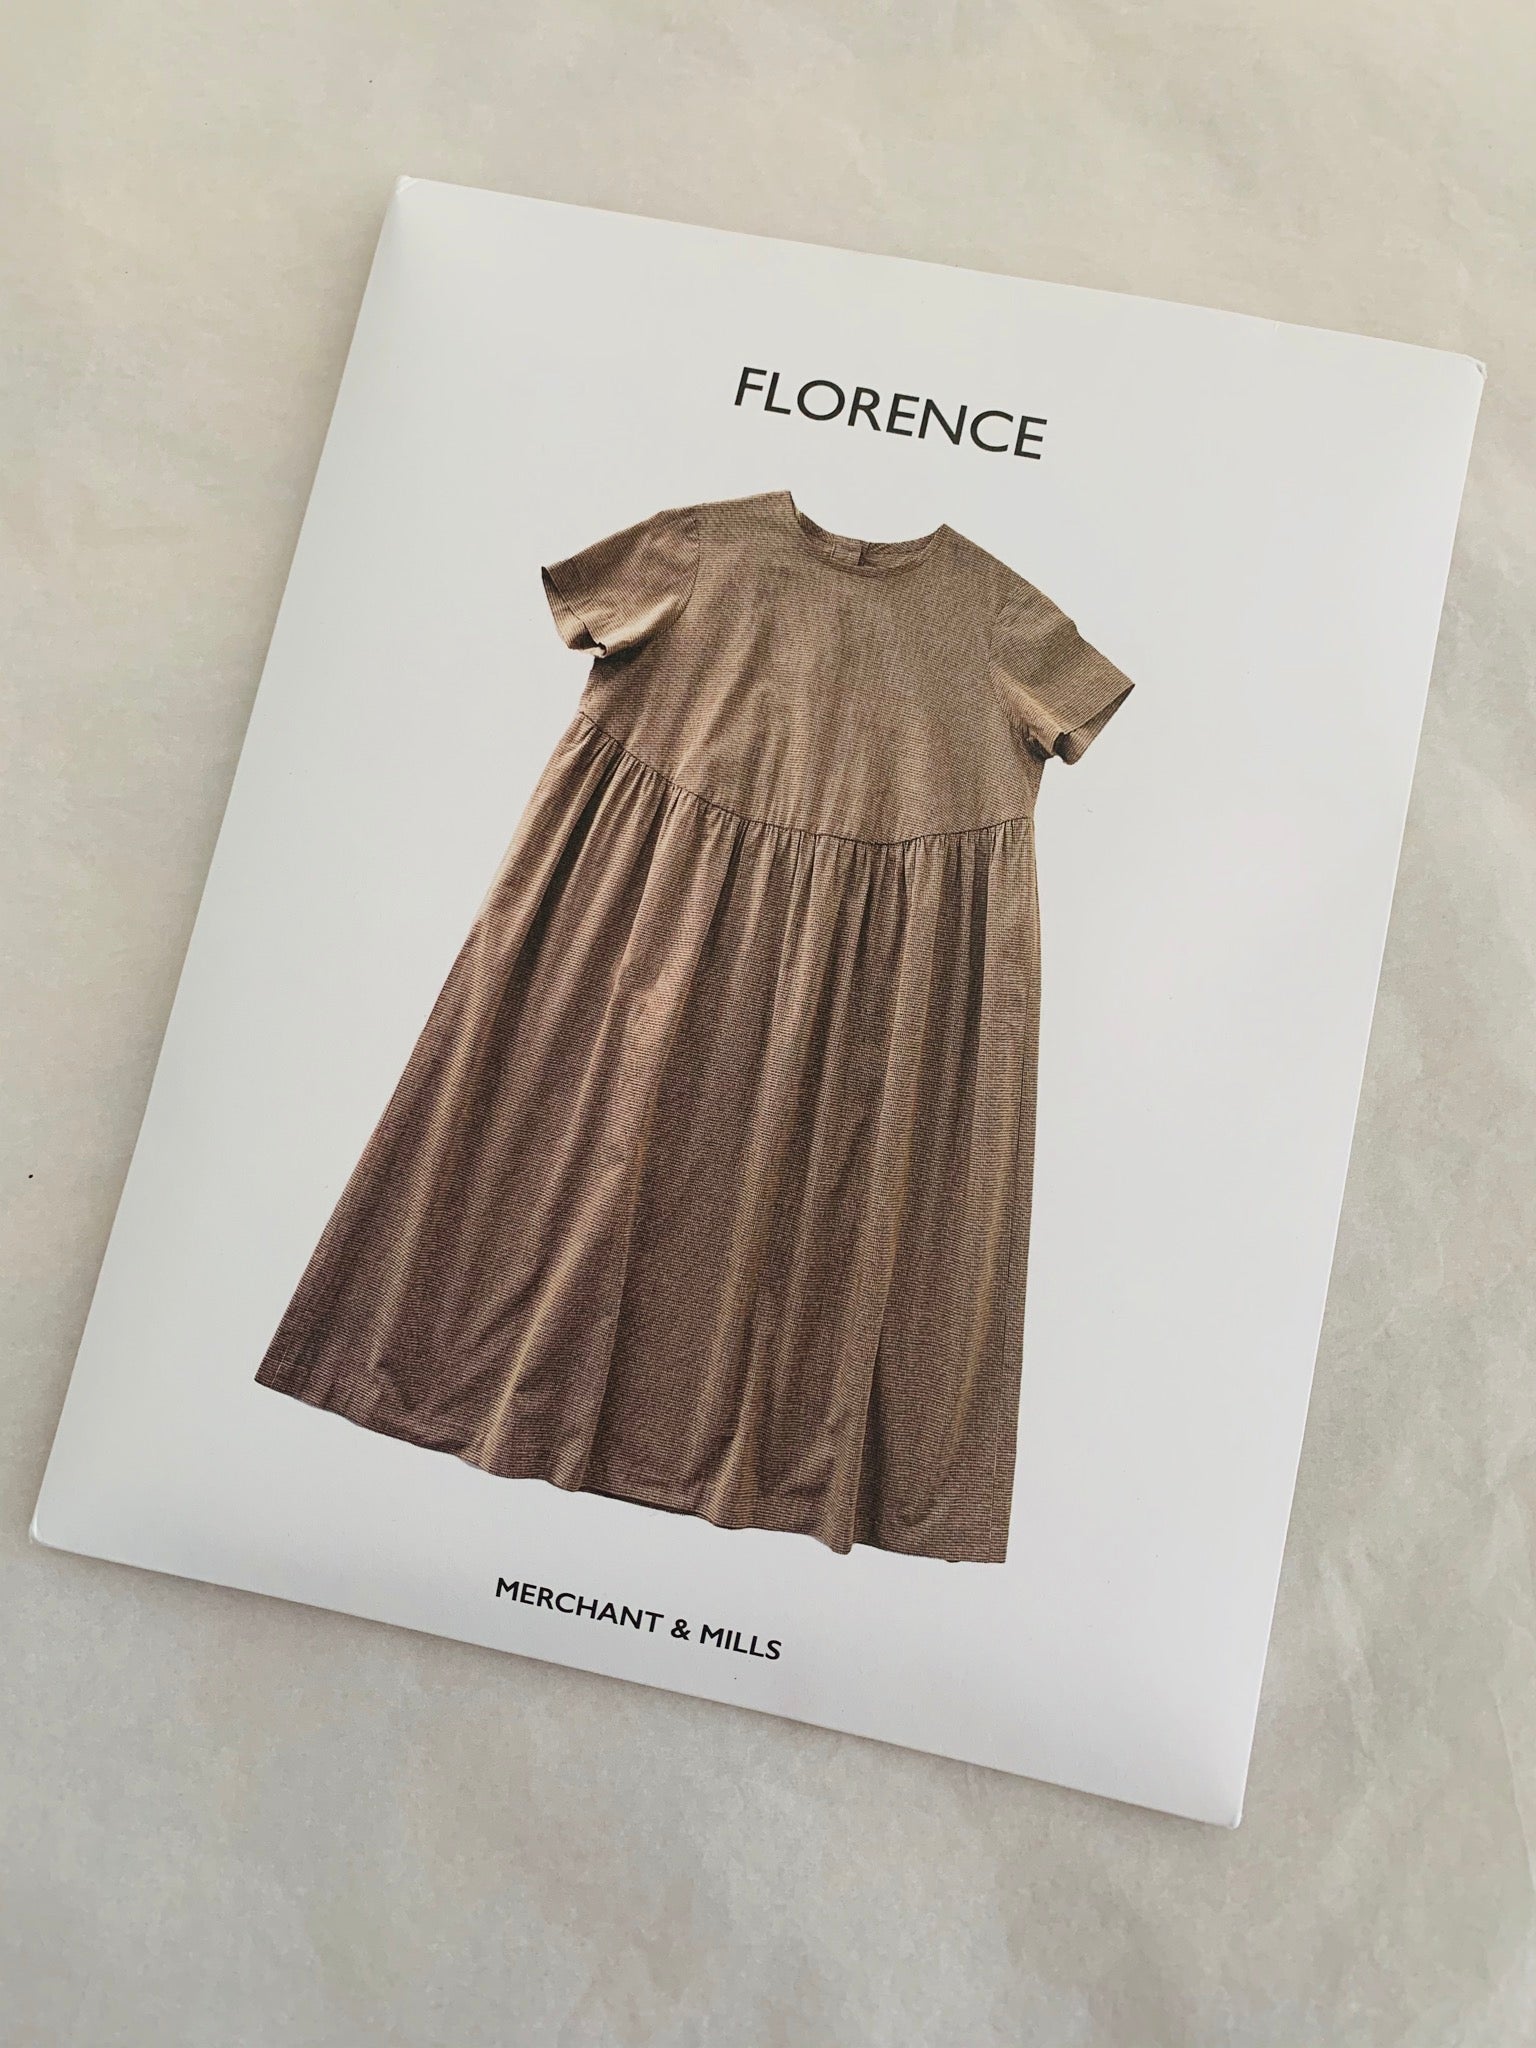 Merchant & Mills Sewing Pattern: Florence